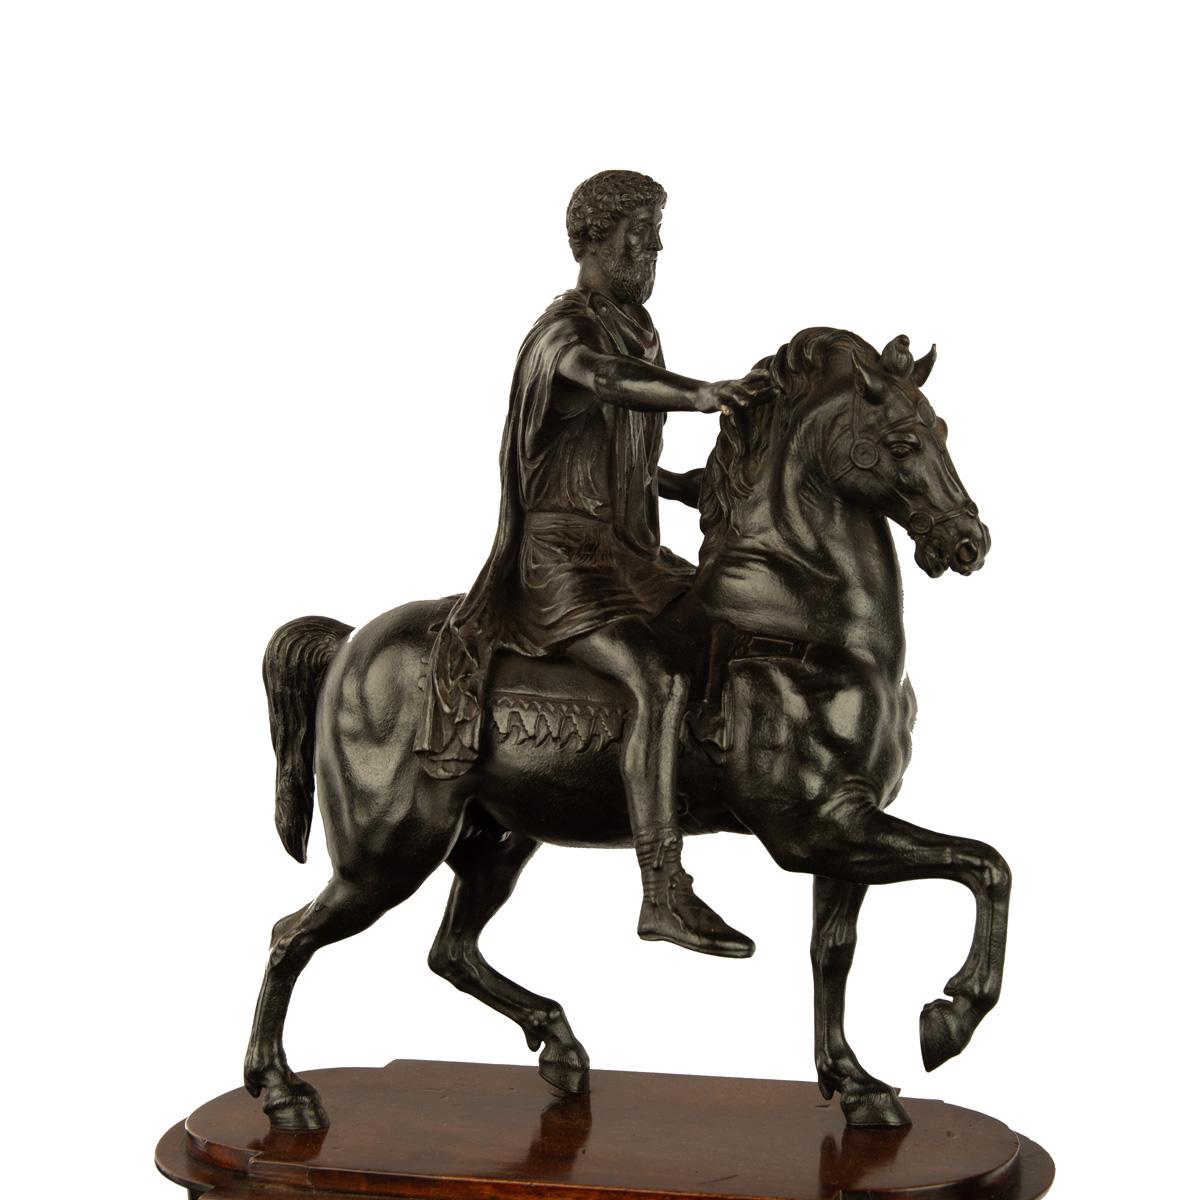 19th Century A Grand Tour equestrian bronze of Marcus Aurelius, after Hopfgarten